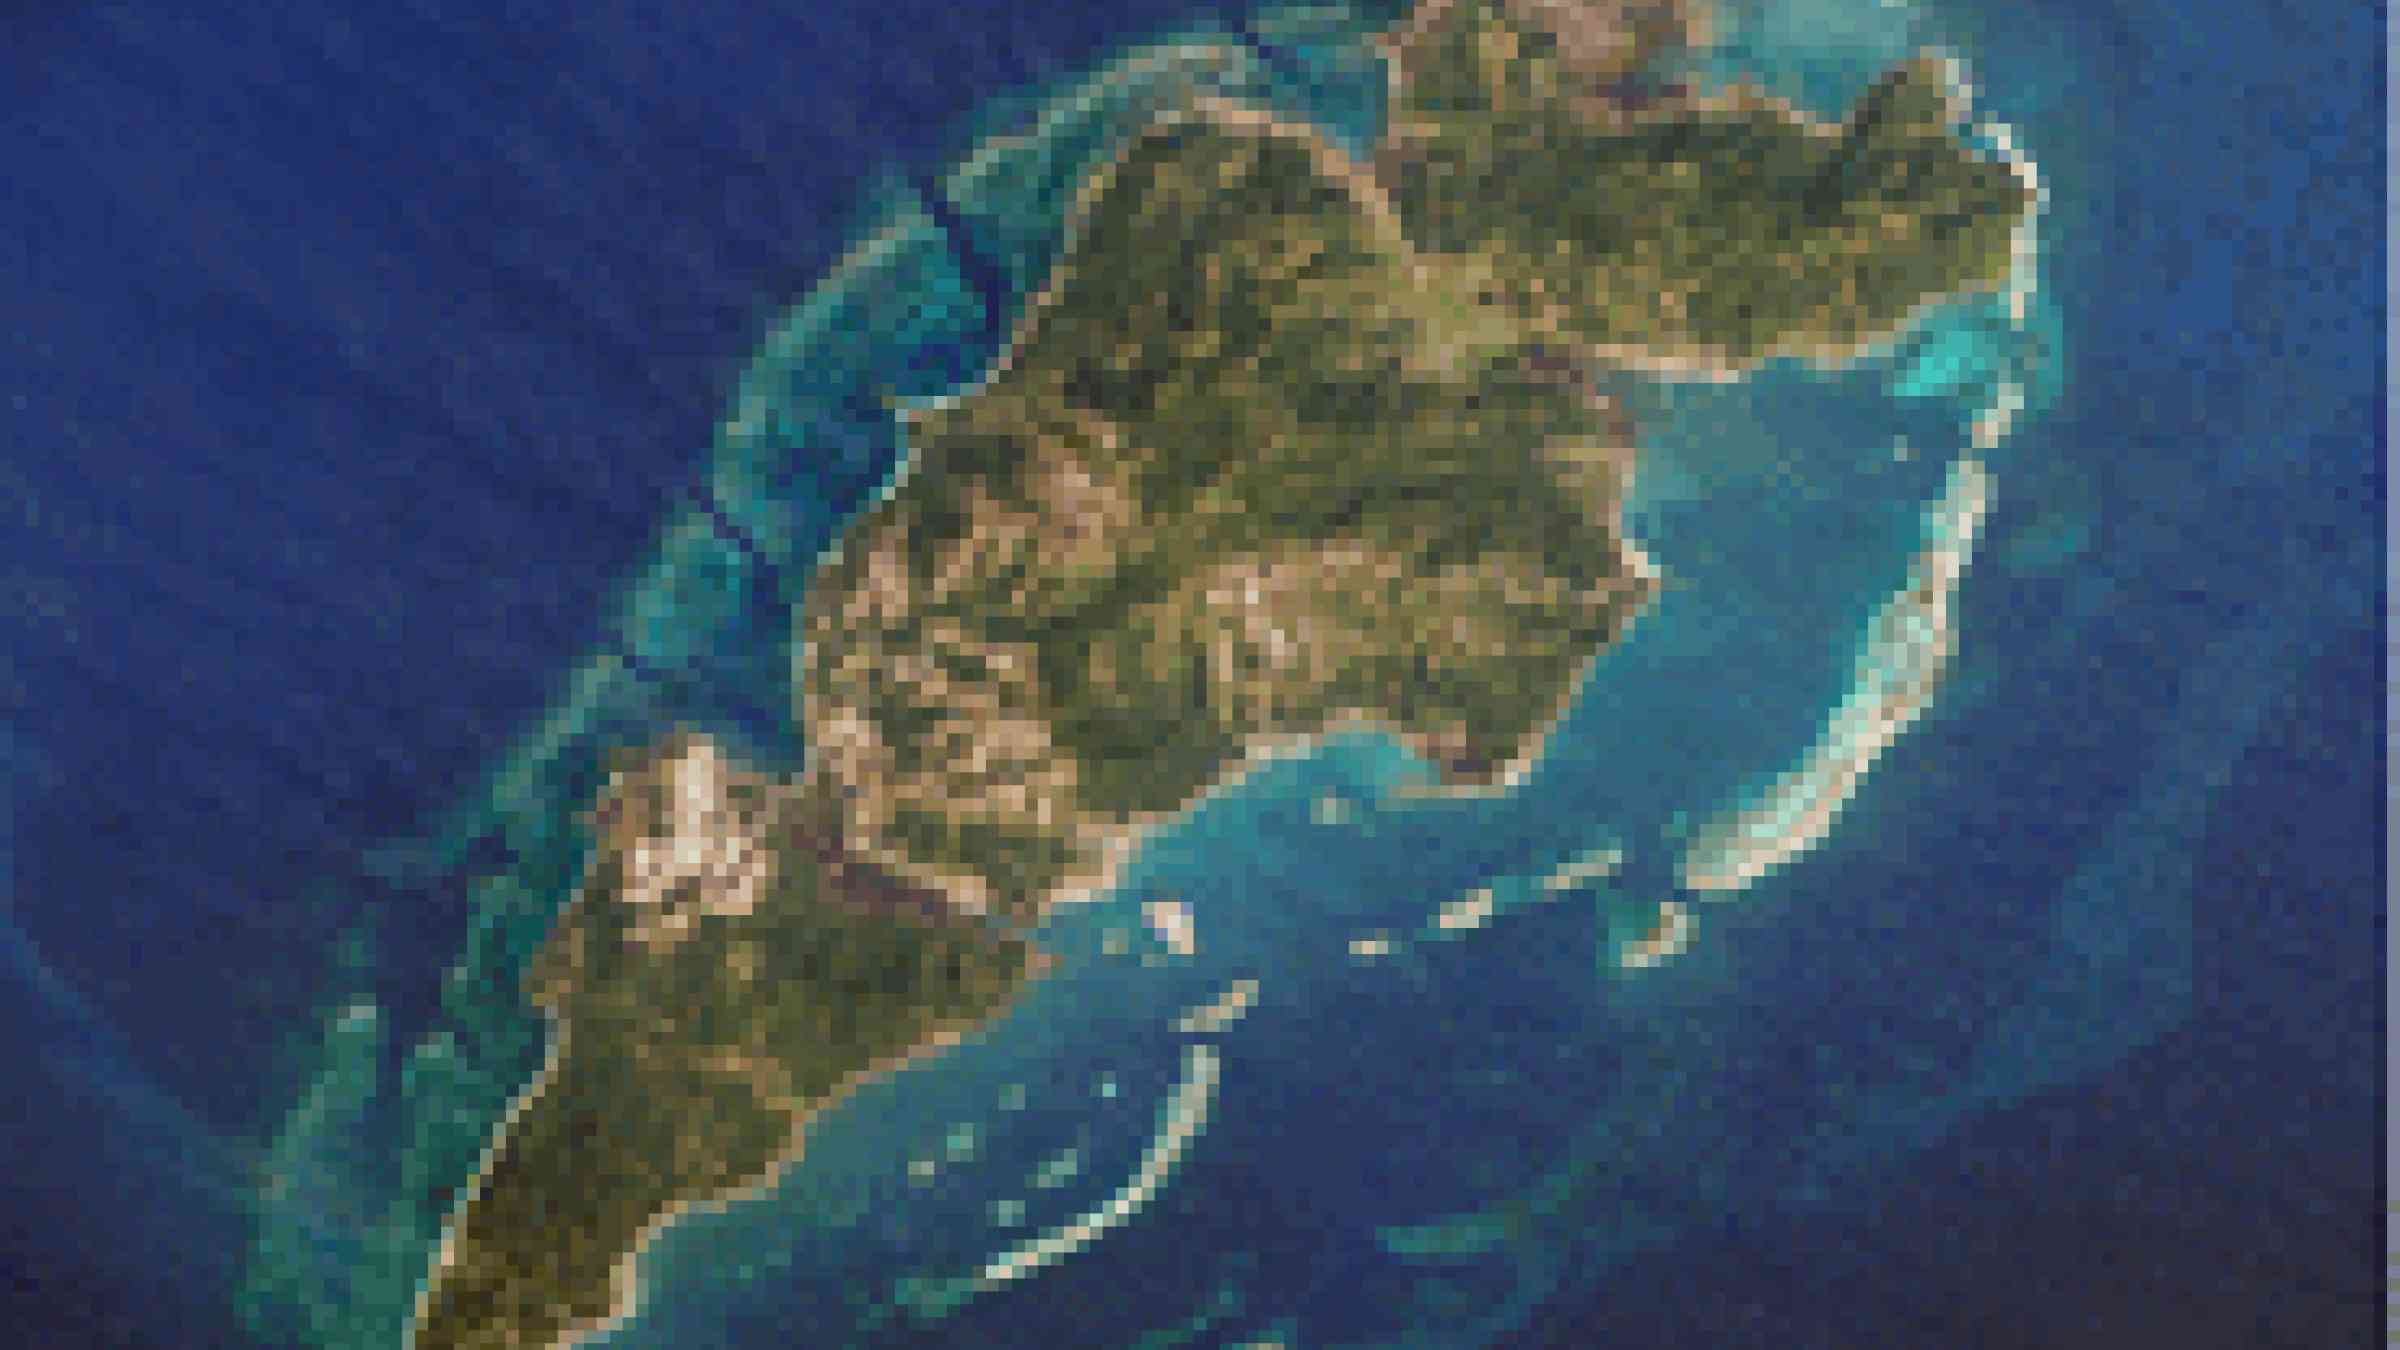 Guanaja Island: photo coutesty of NASA/JSC